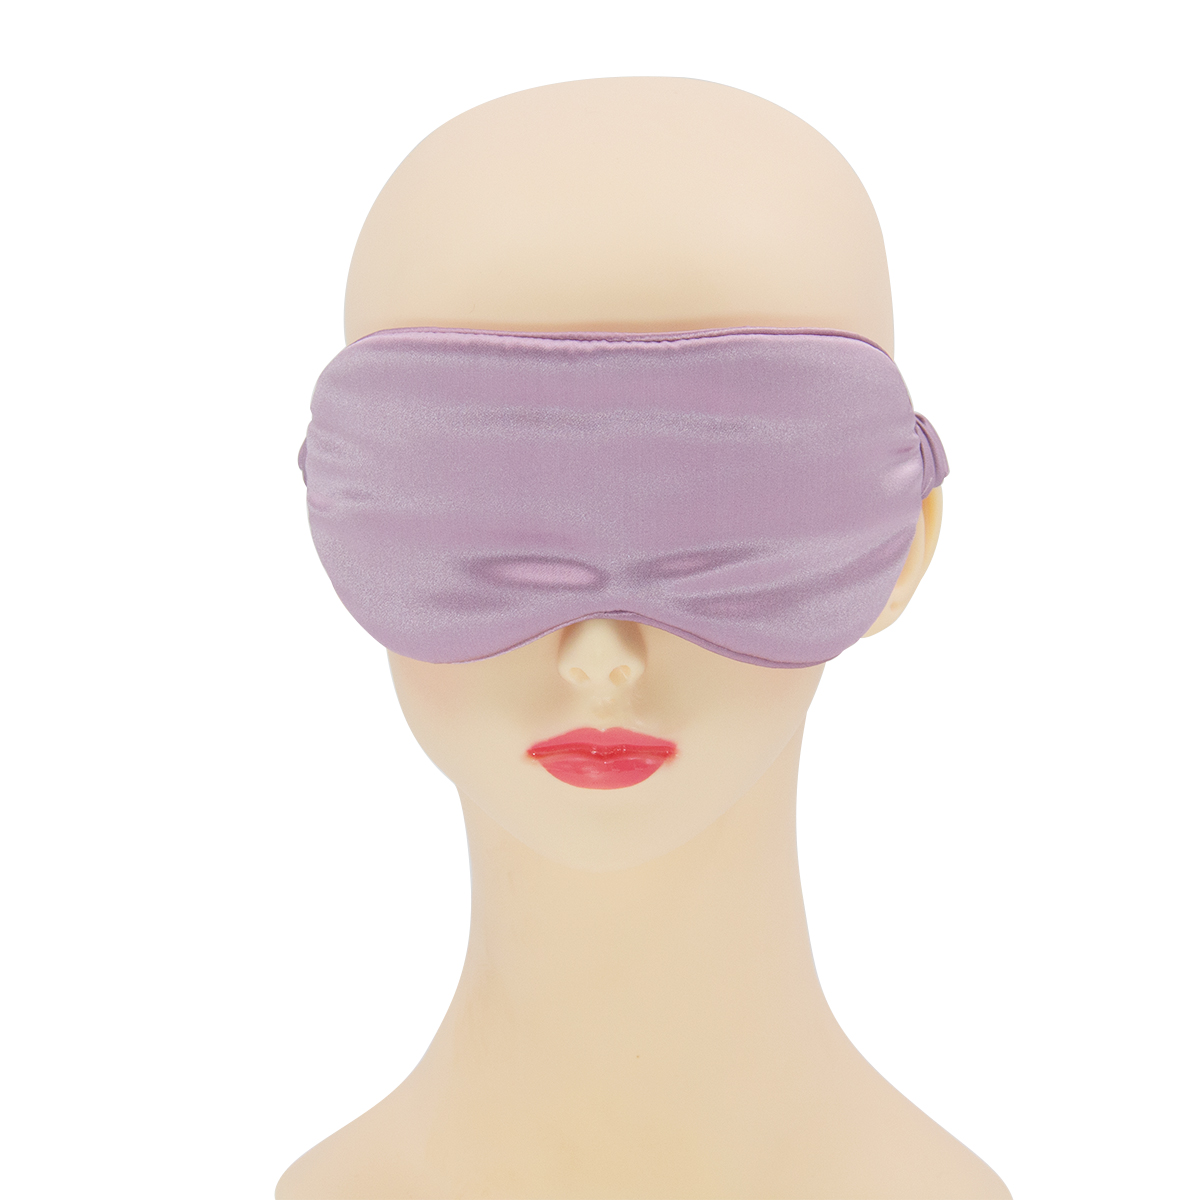 High Quality Luxury Comfortable 100% Pure Mulberry Silk Eye Mask Adjustable